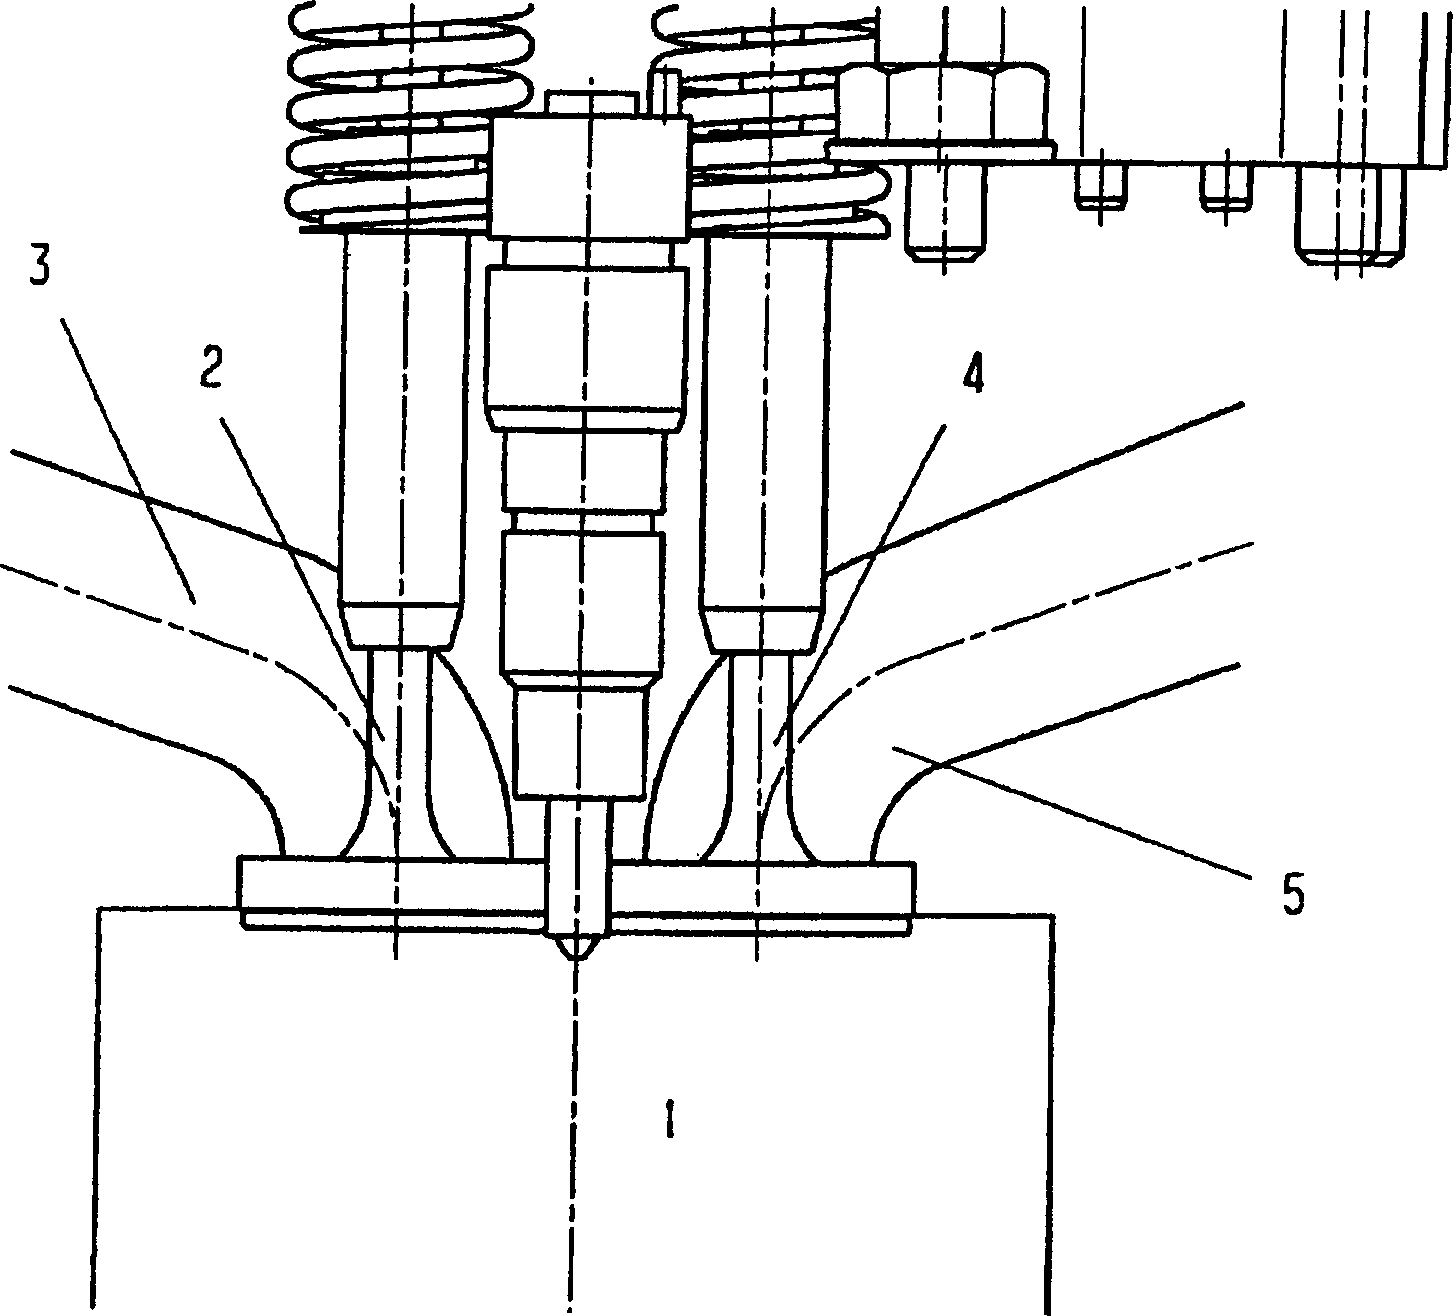 Internal exhaust recirculation method for an internal combustion engine